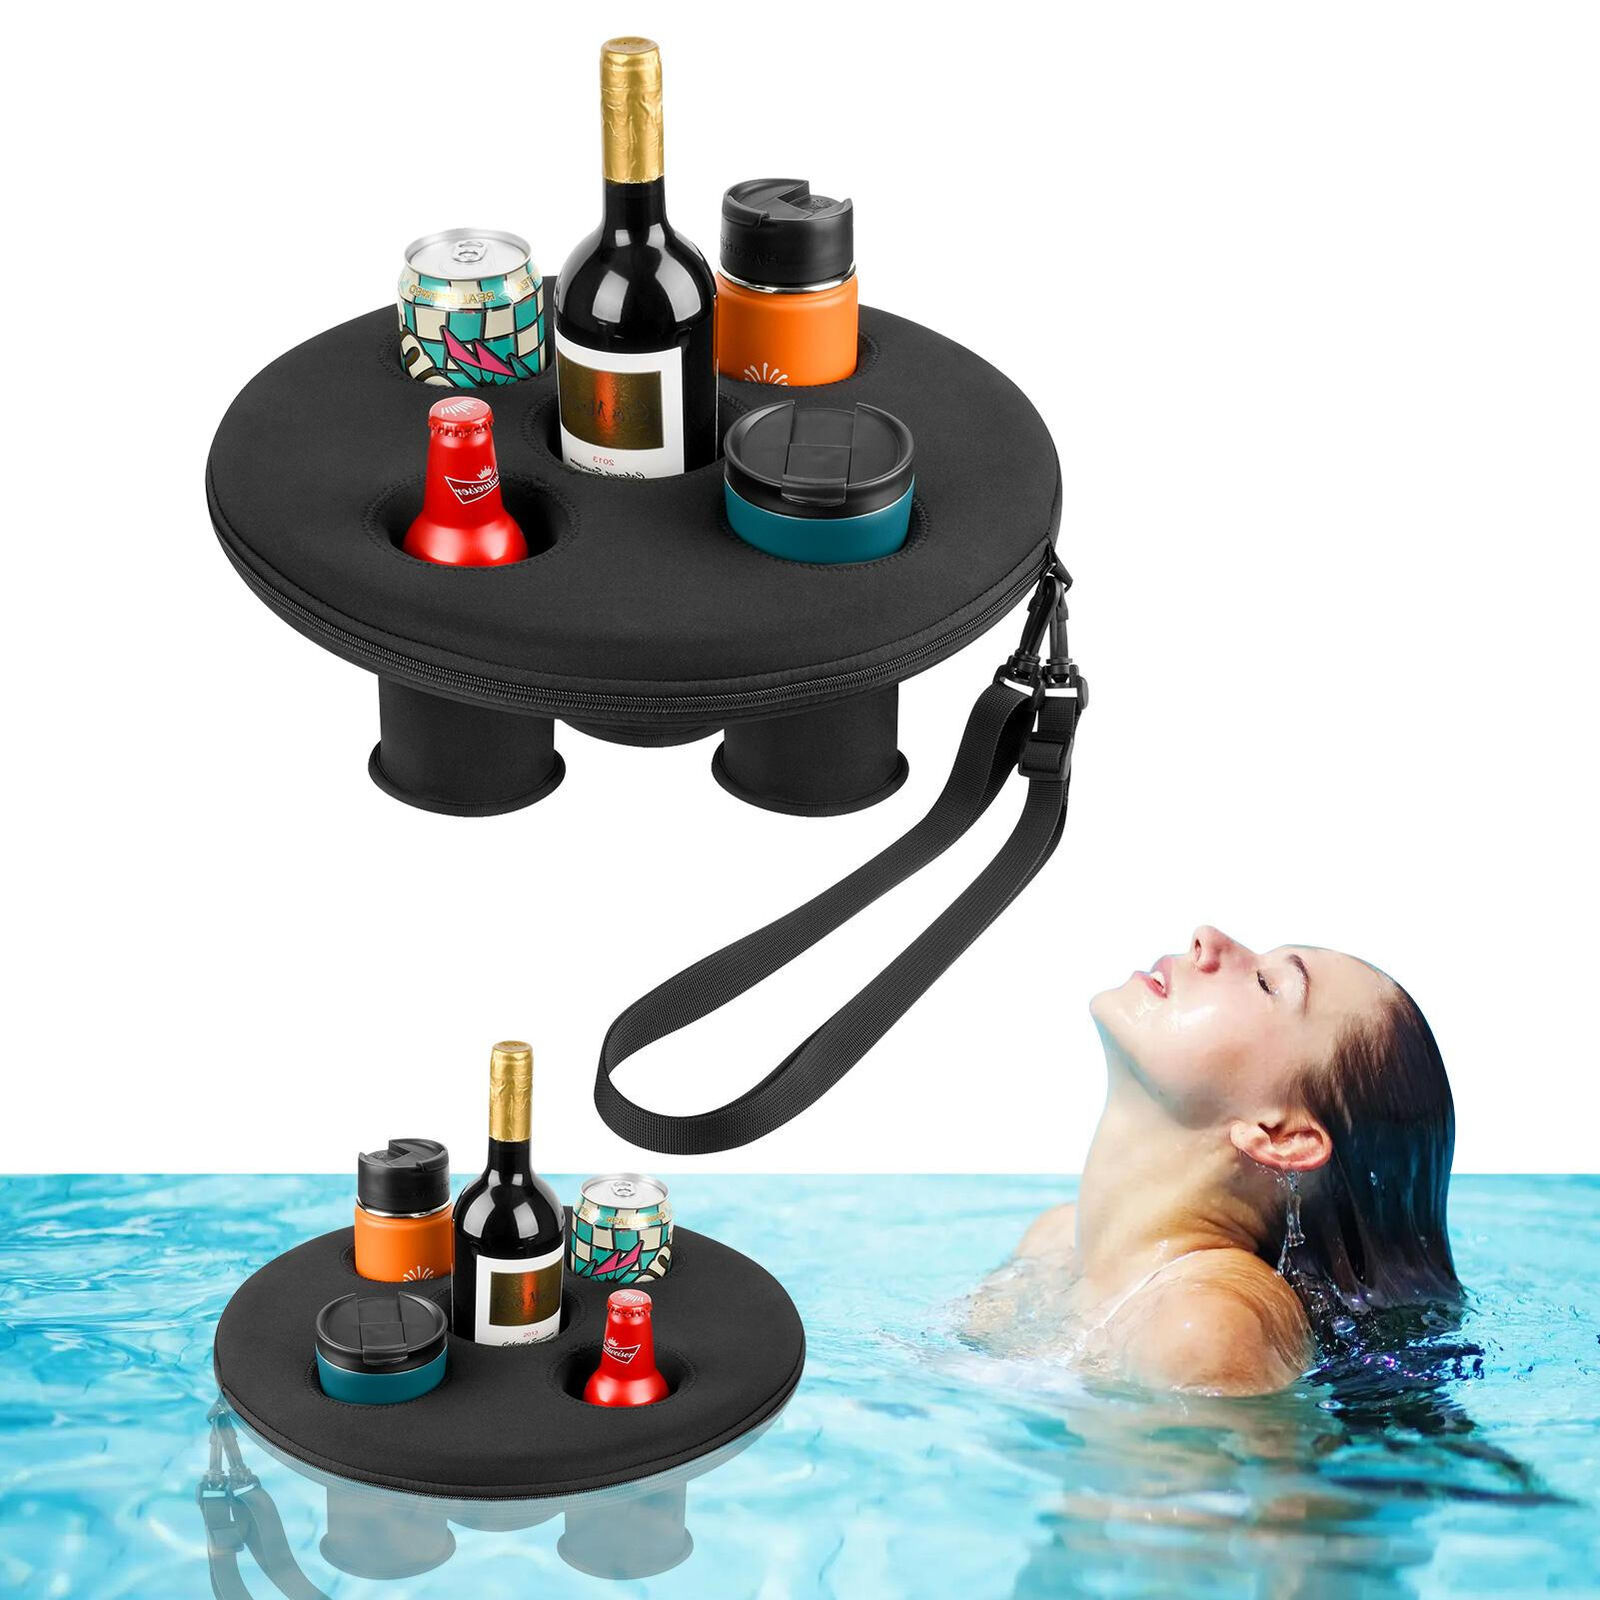 With 5 Holes Floating Drink Holder Float Beer Drinking Cooler Table Summer